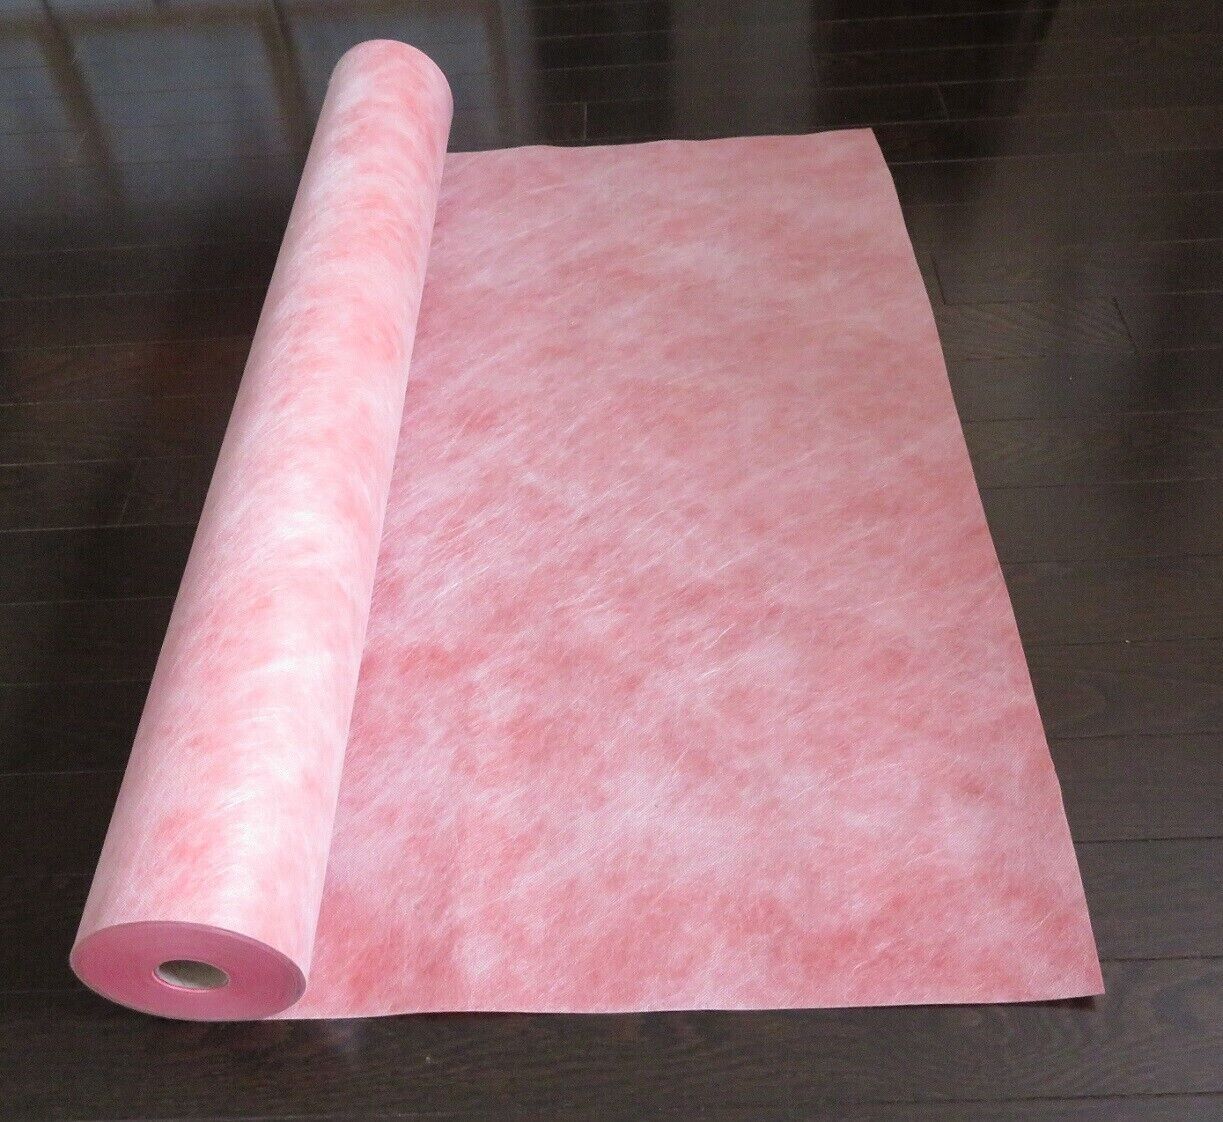 Primary image for IB Tools Shower Waterproofing Membrane 215 SqFt Roll Underlayment for Floor Tile